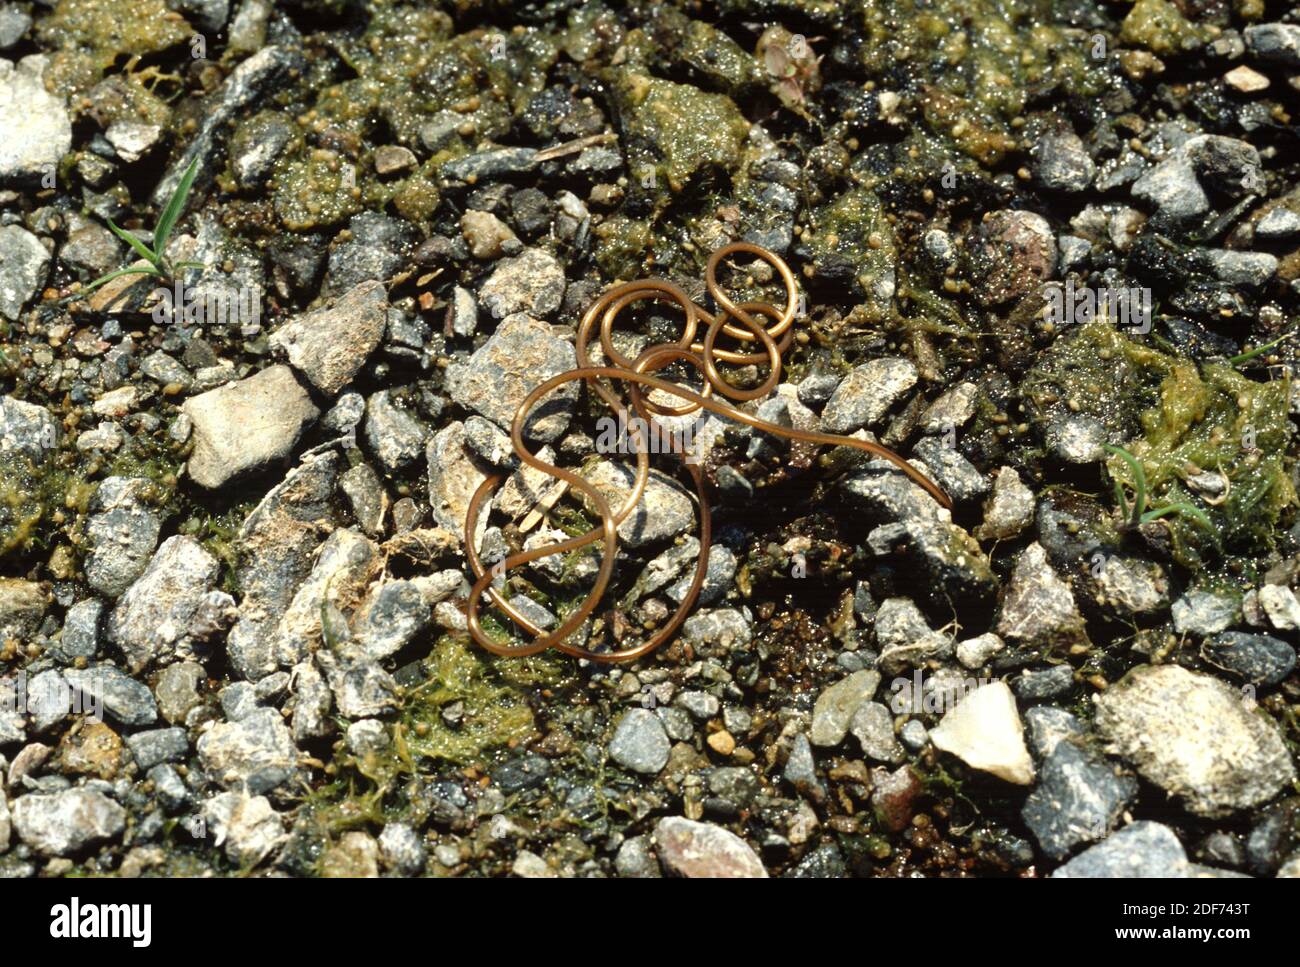 Horsehair worm (Gordius sp. ). This photo was taken in Alt Emporda, Girona province, Catalonia, Spain. Stock Photo